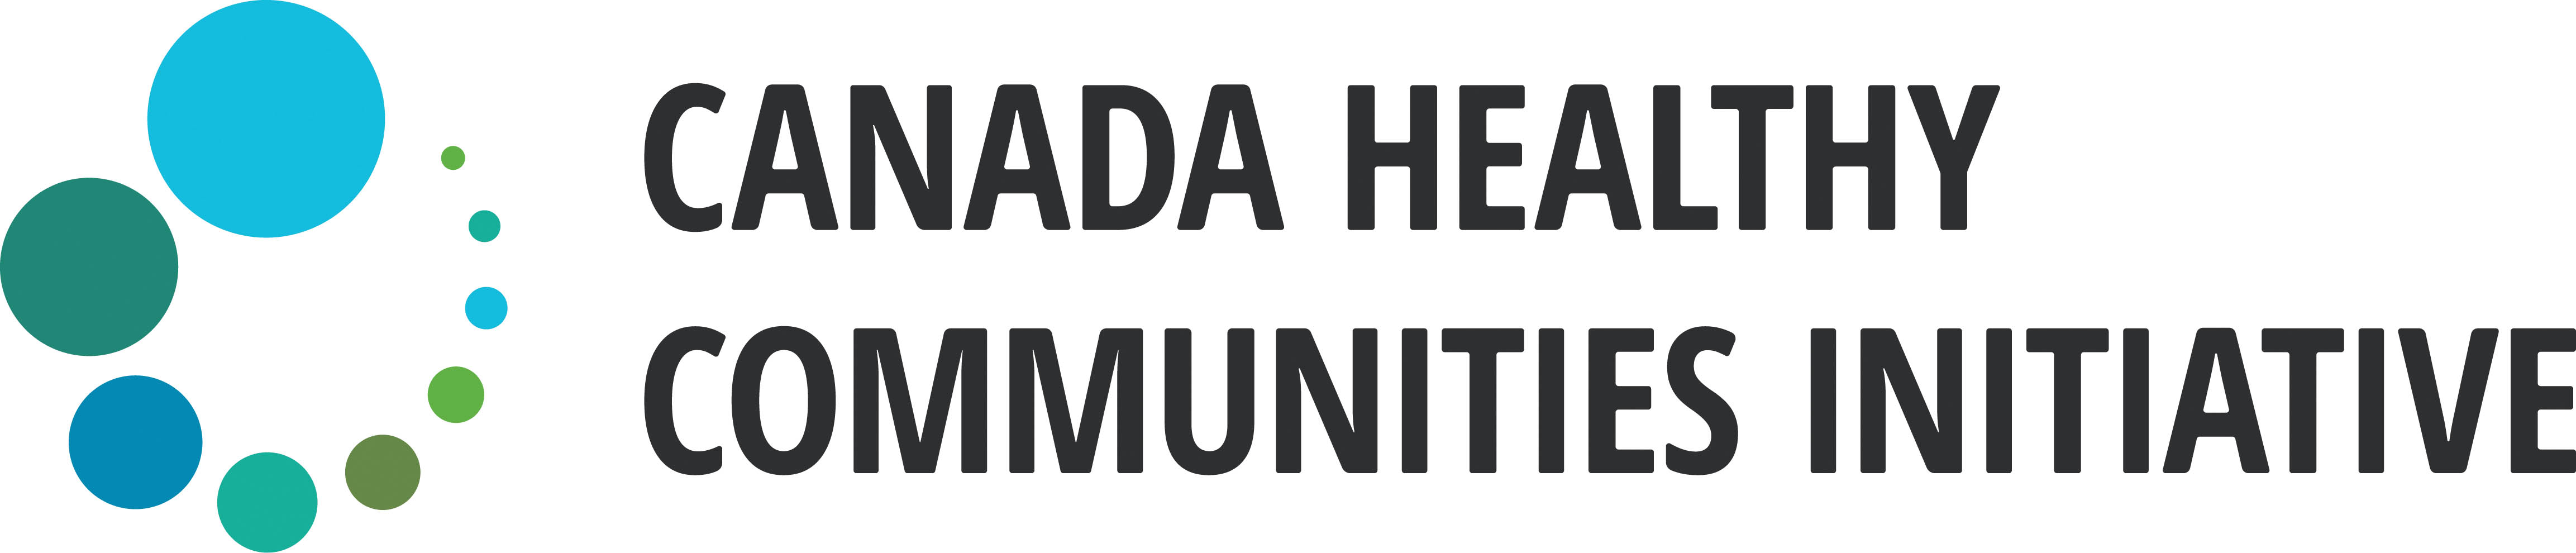 Canada Healthy Communities Initiative